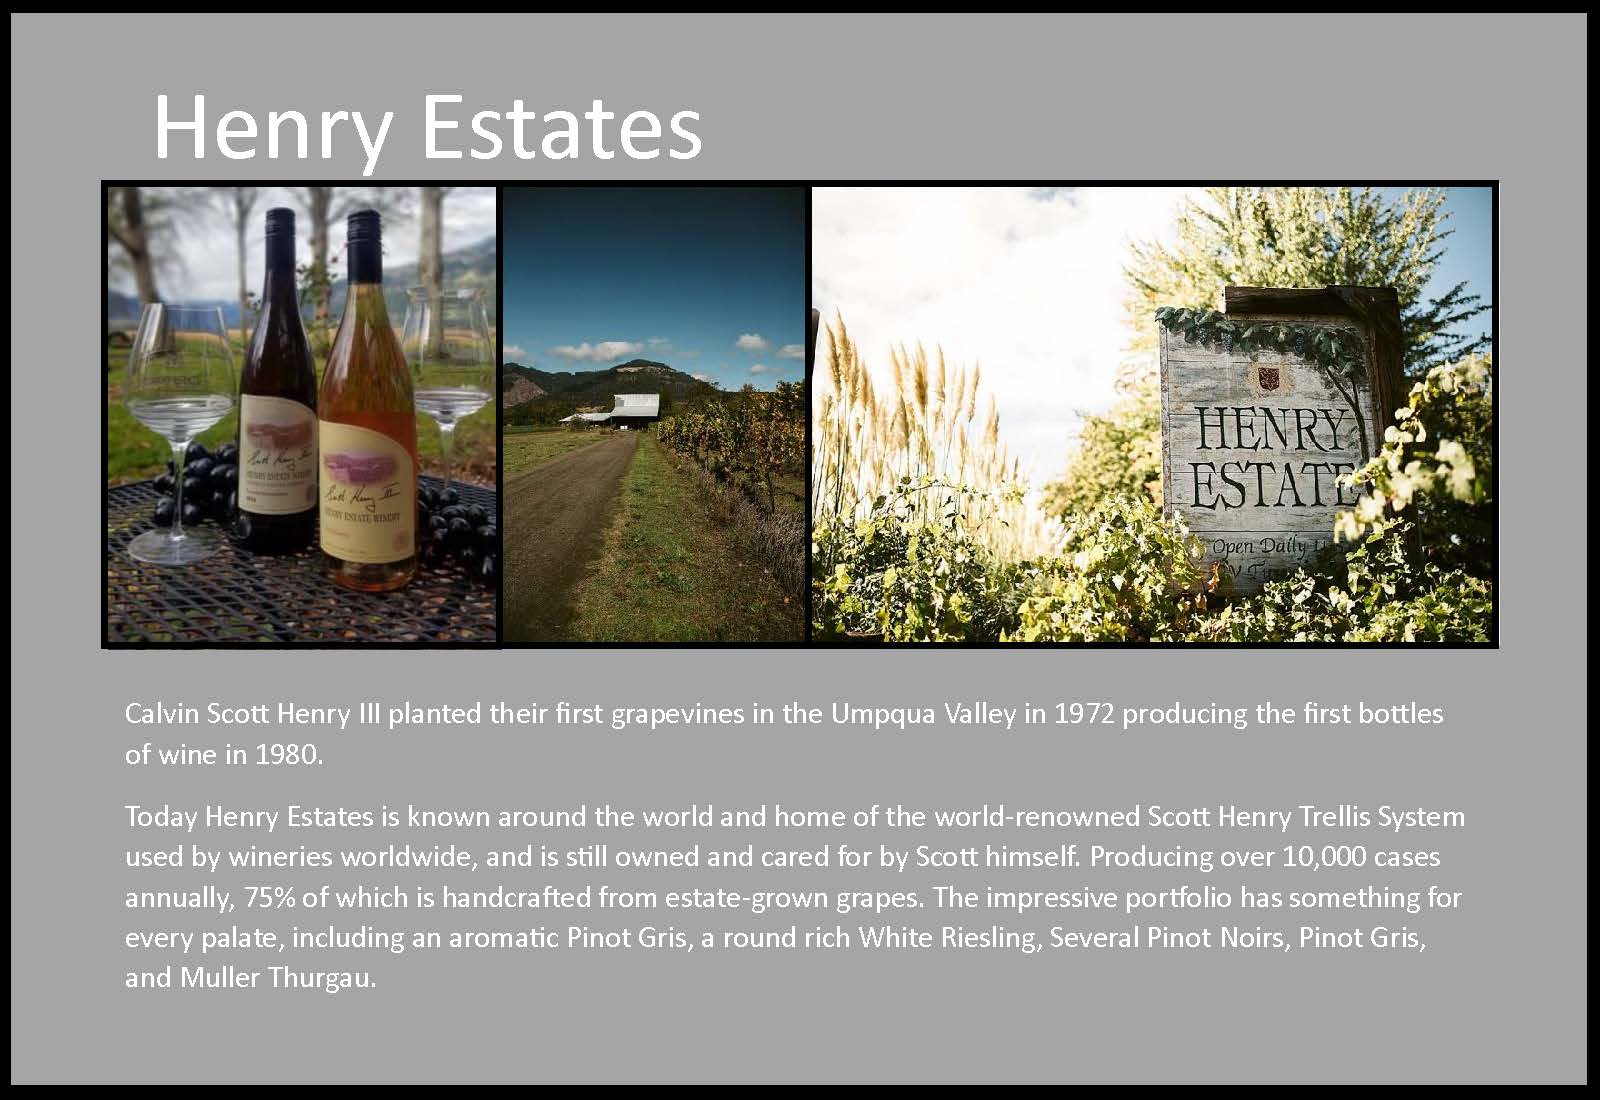 henry estates - website layout